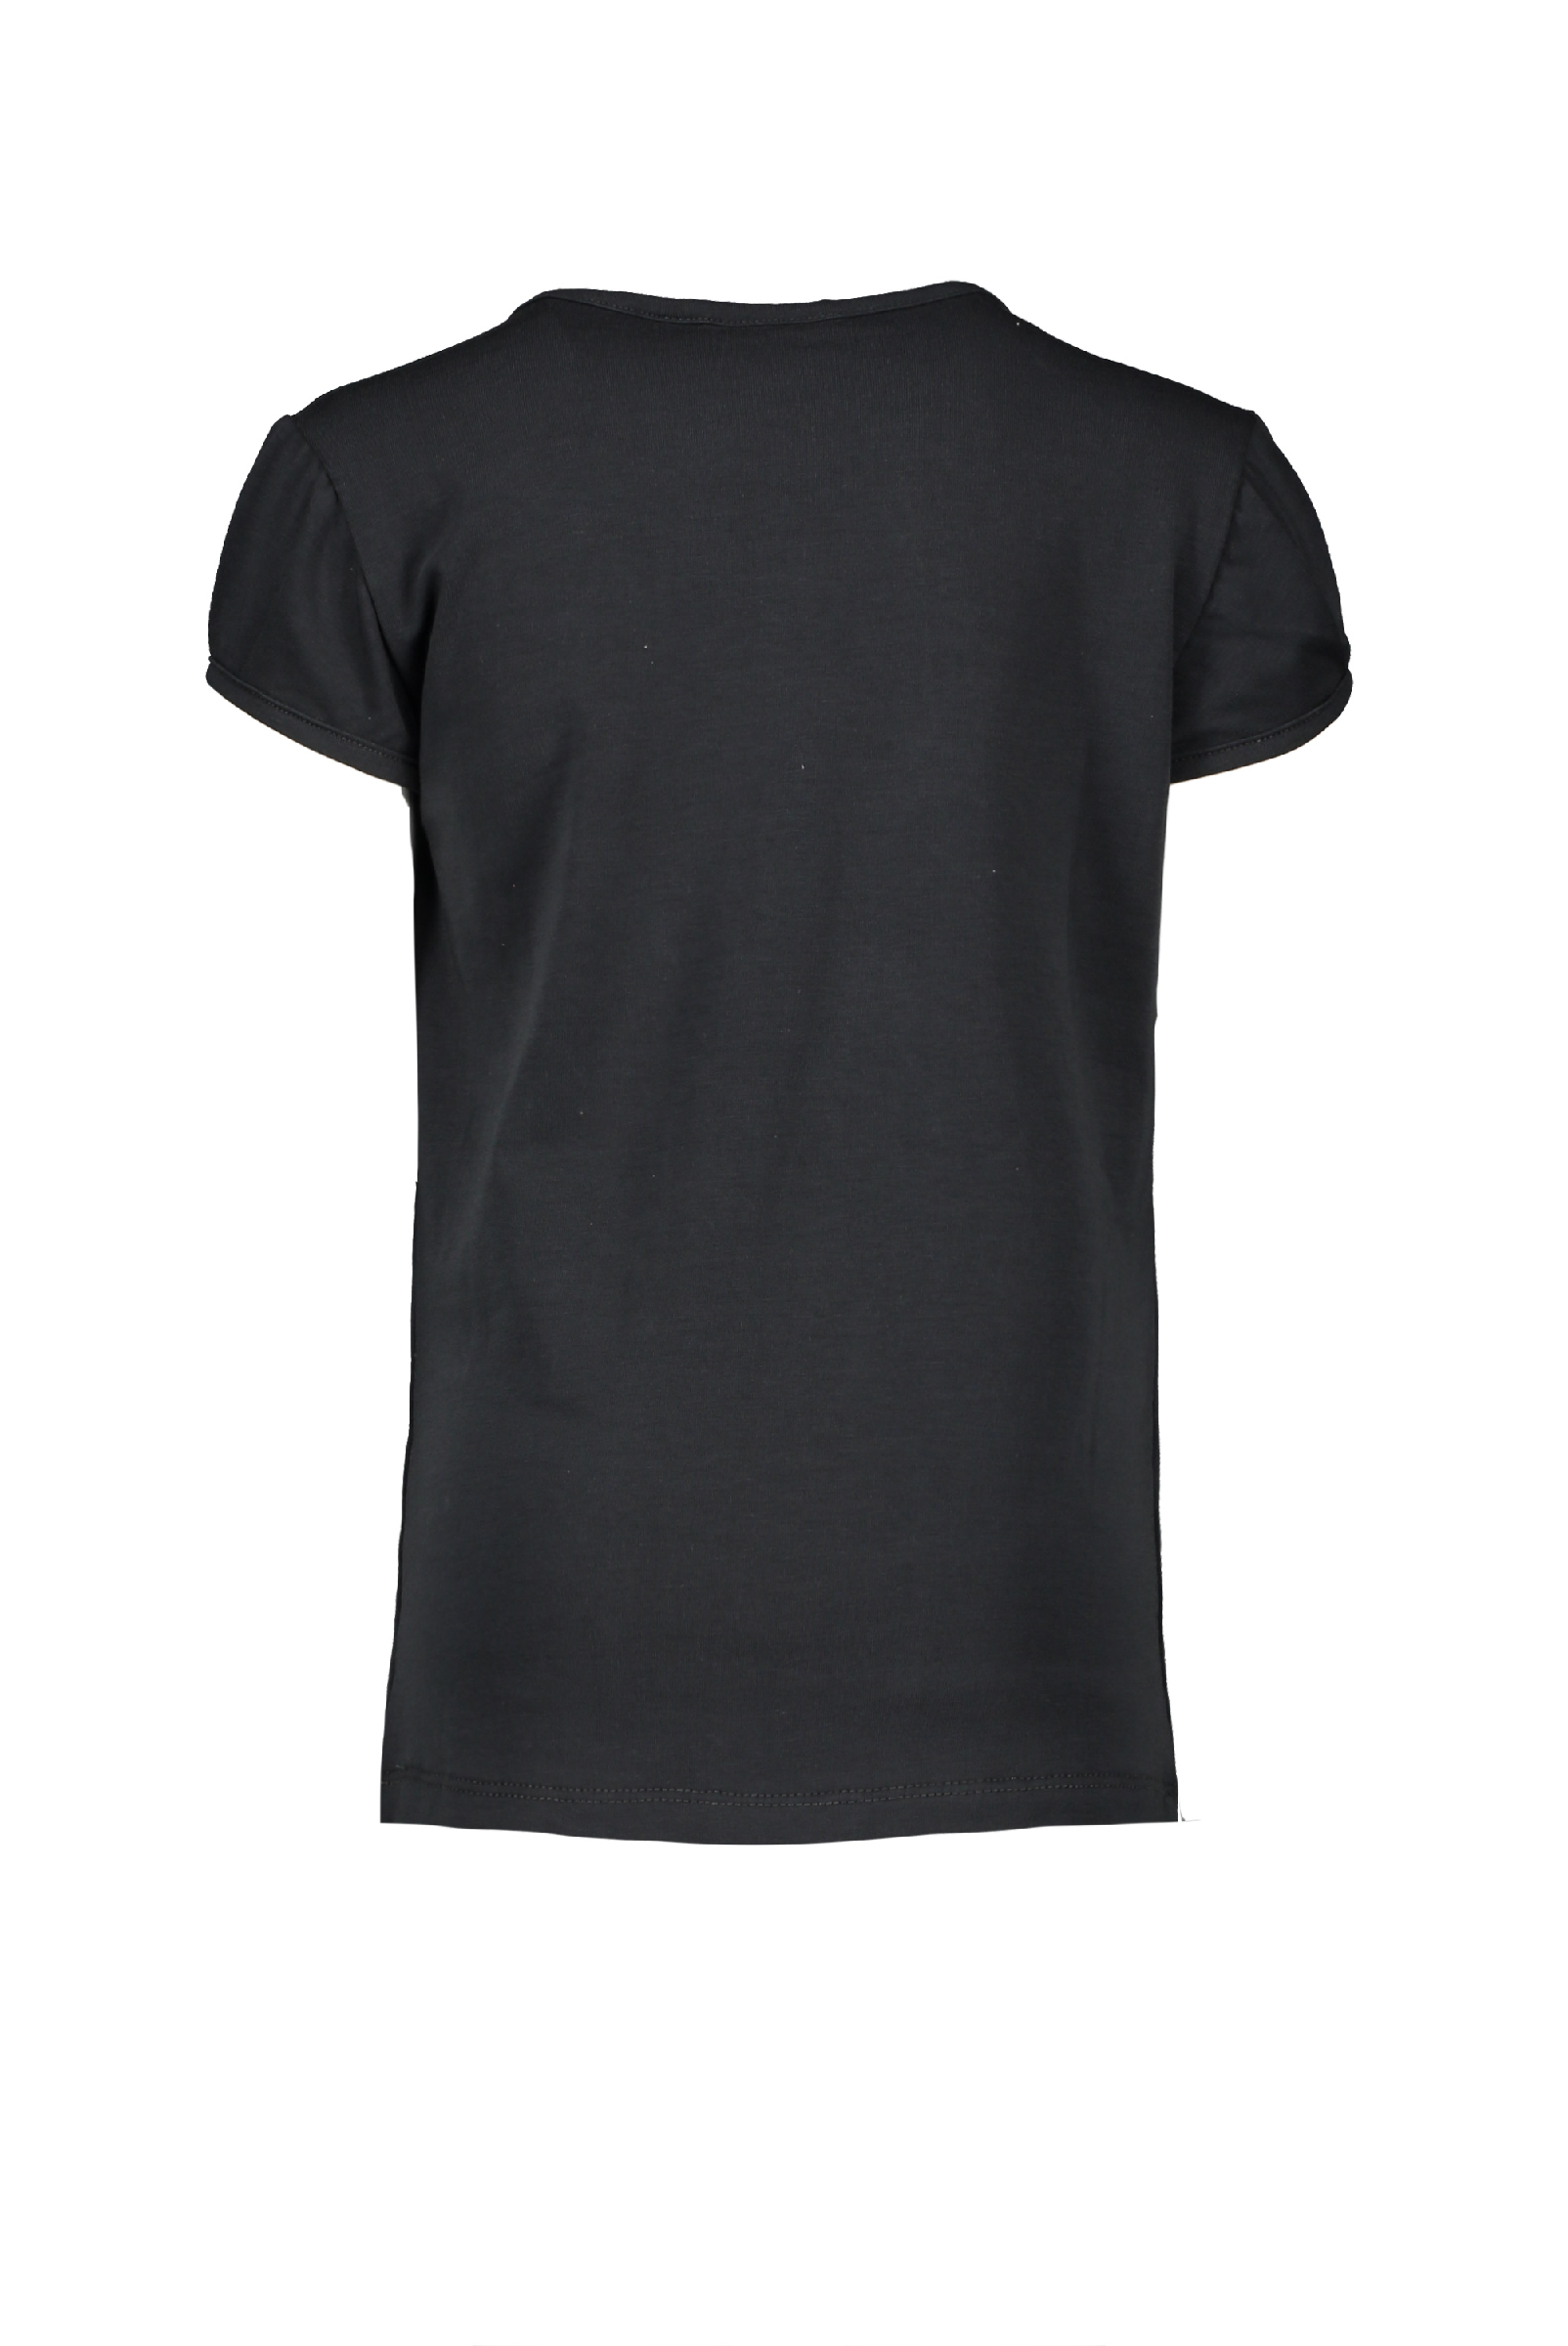 Meisjes Kamsi ss shirt Tres Cool print van NoNo in de kleur Nearly Black in maat 146, 152.